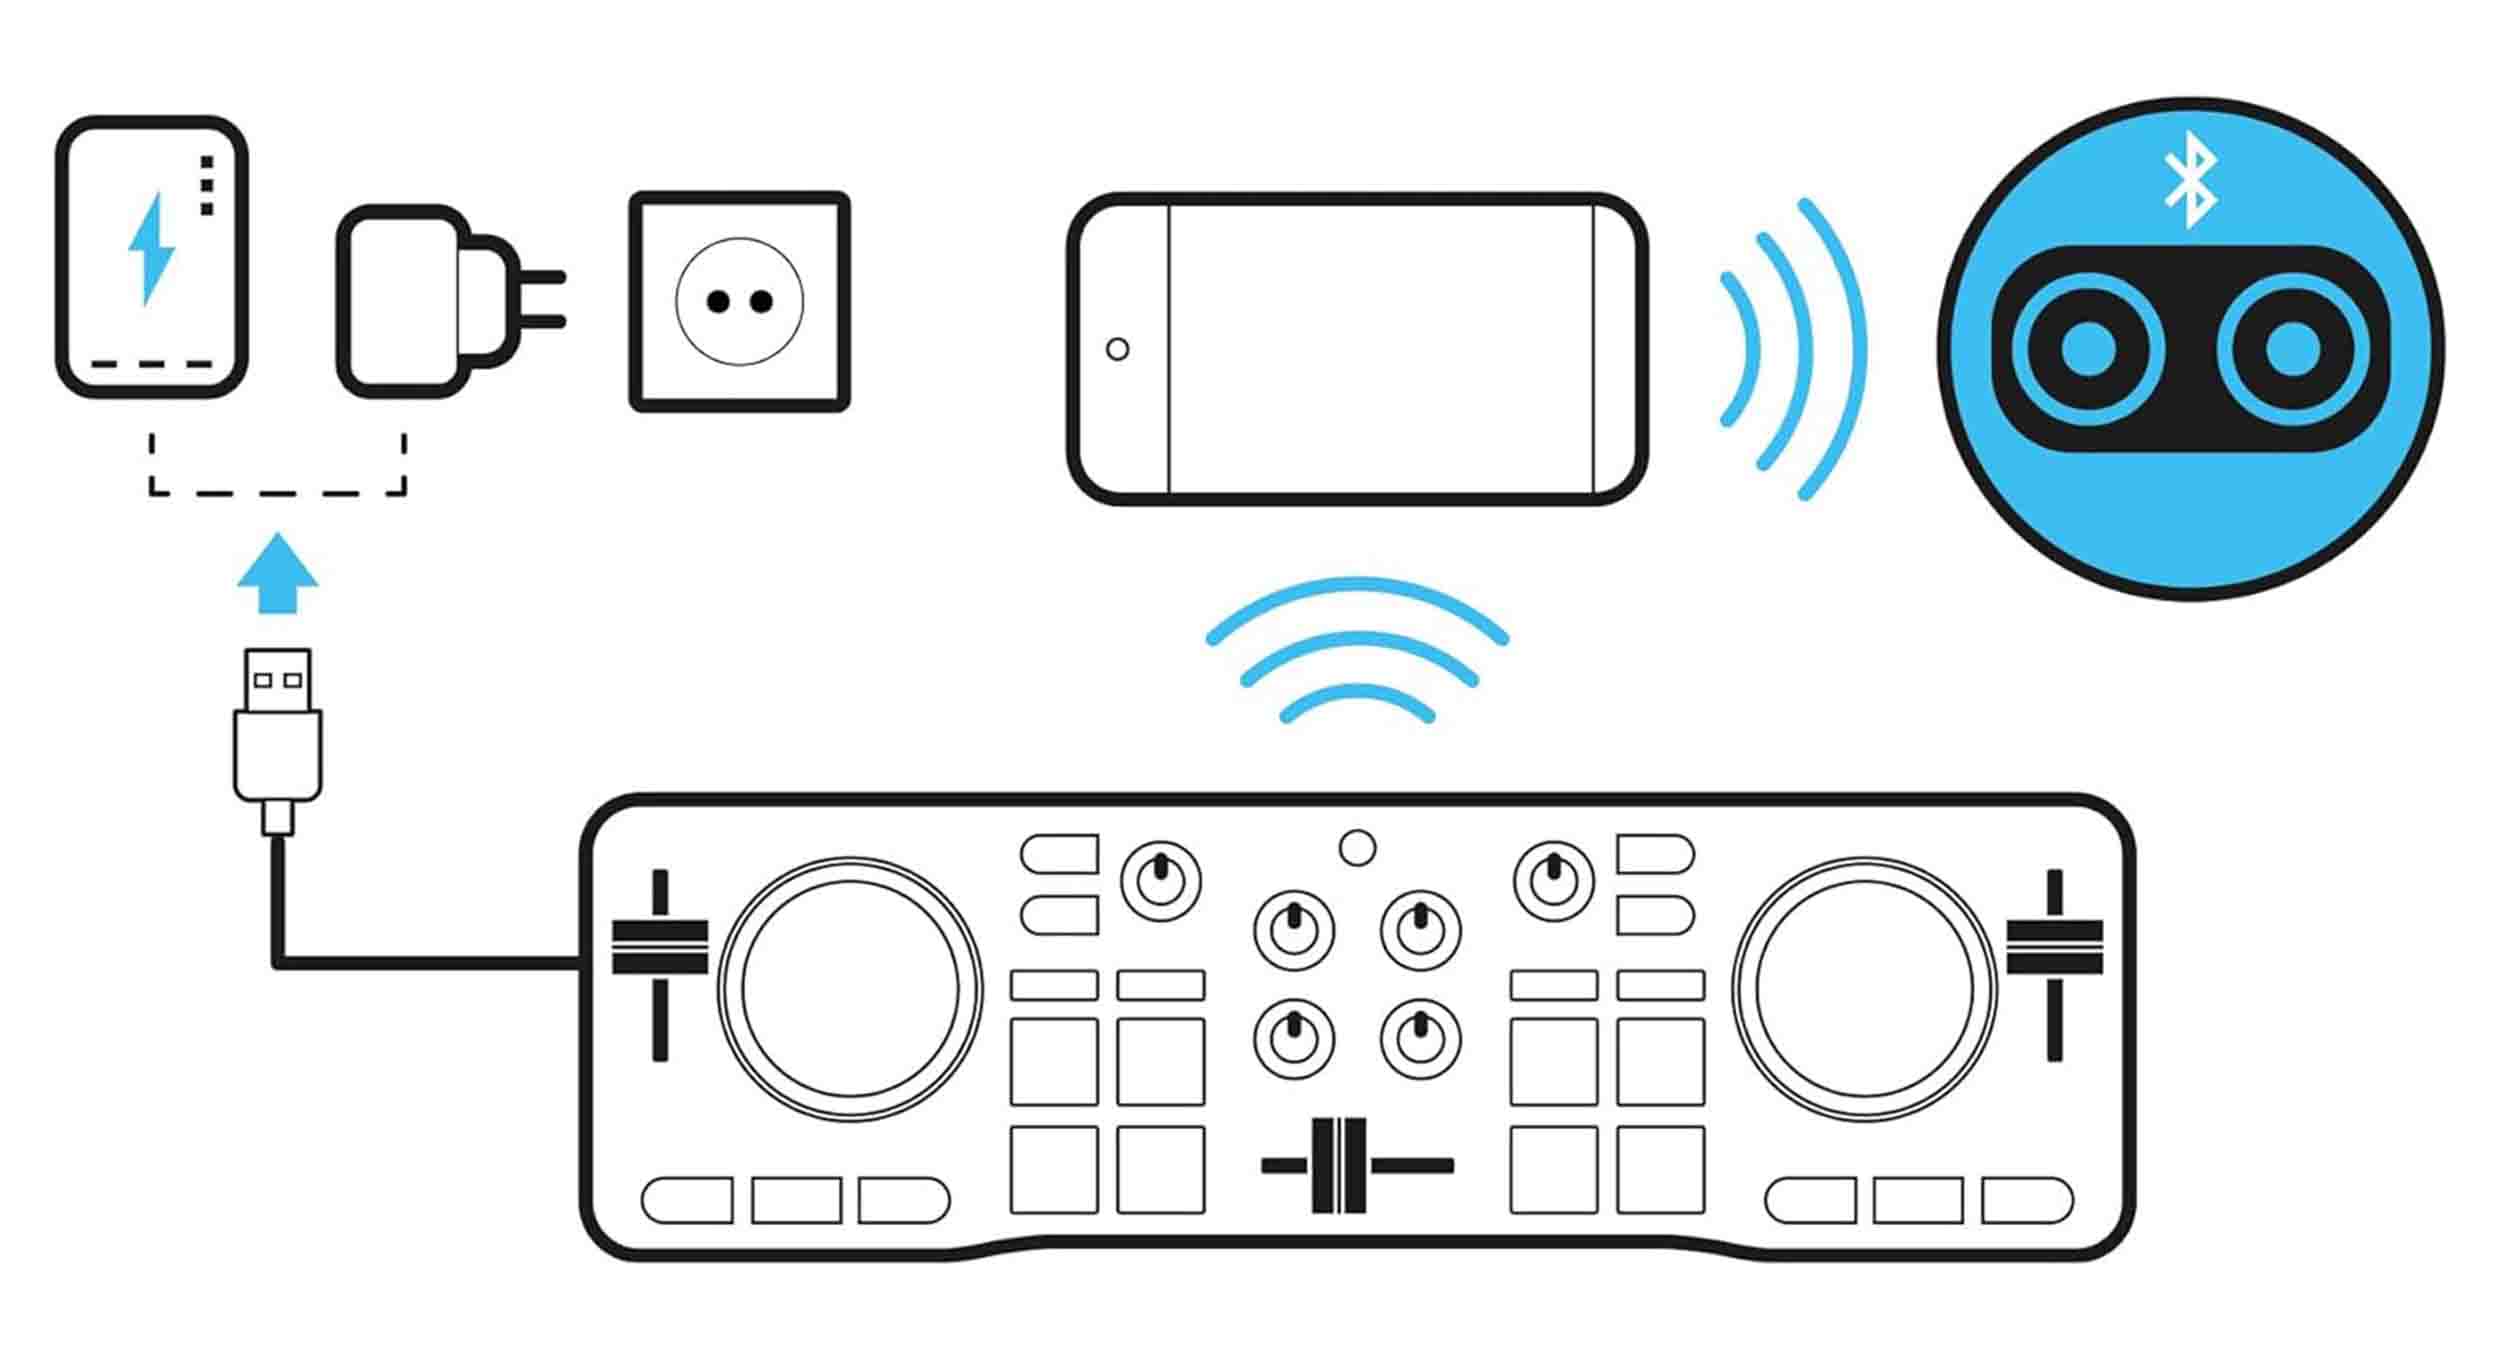 Hercules DJControl Mix Blue Bluetooth Wireless Controller for Smartphones by Hercules